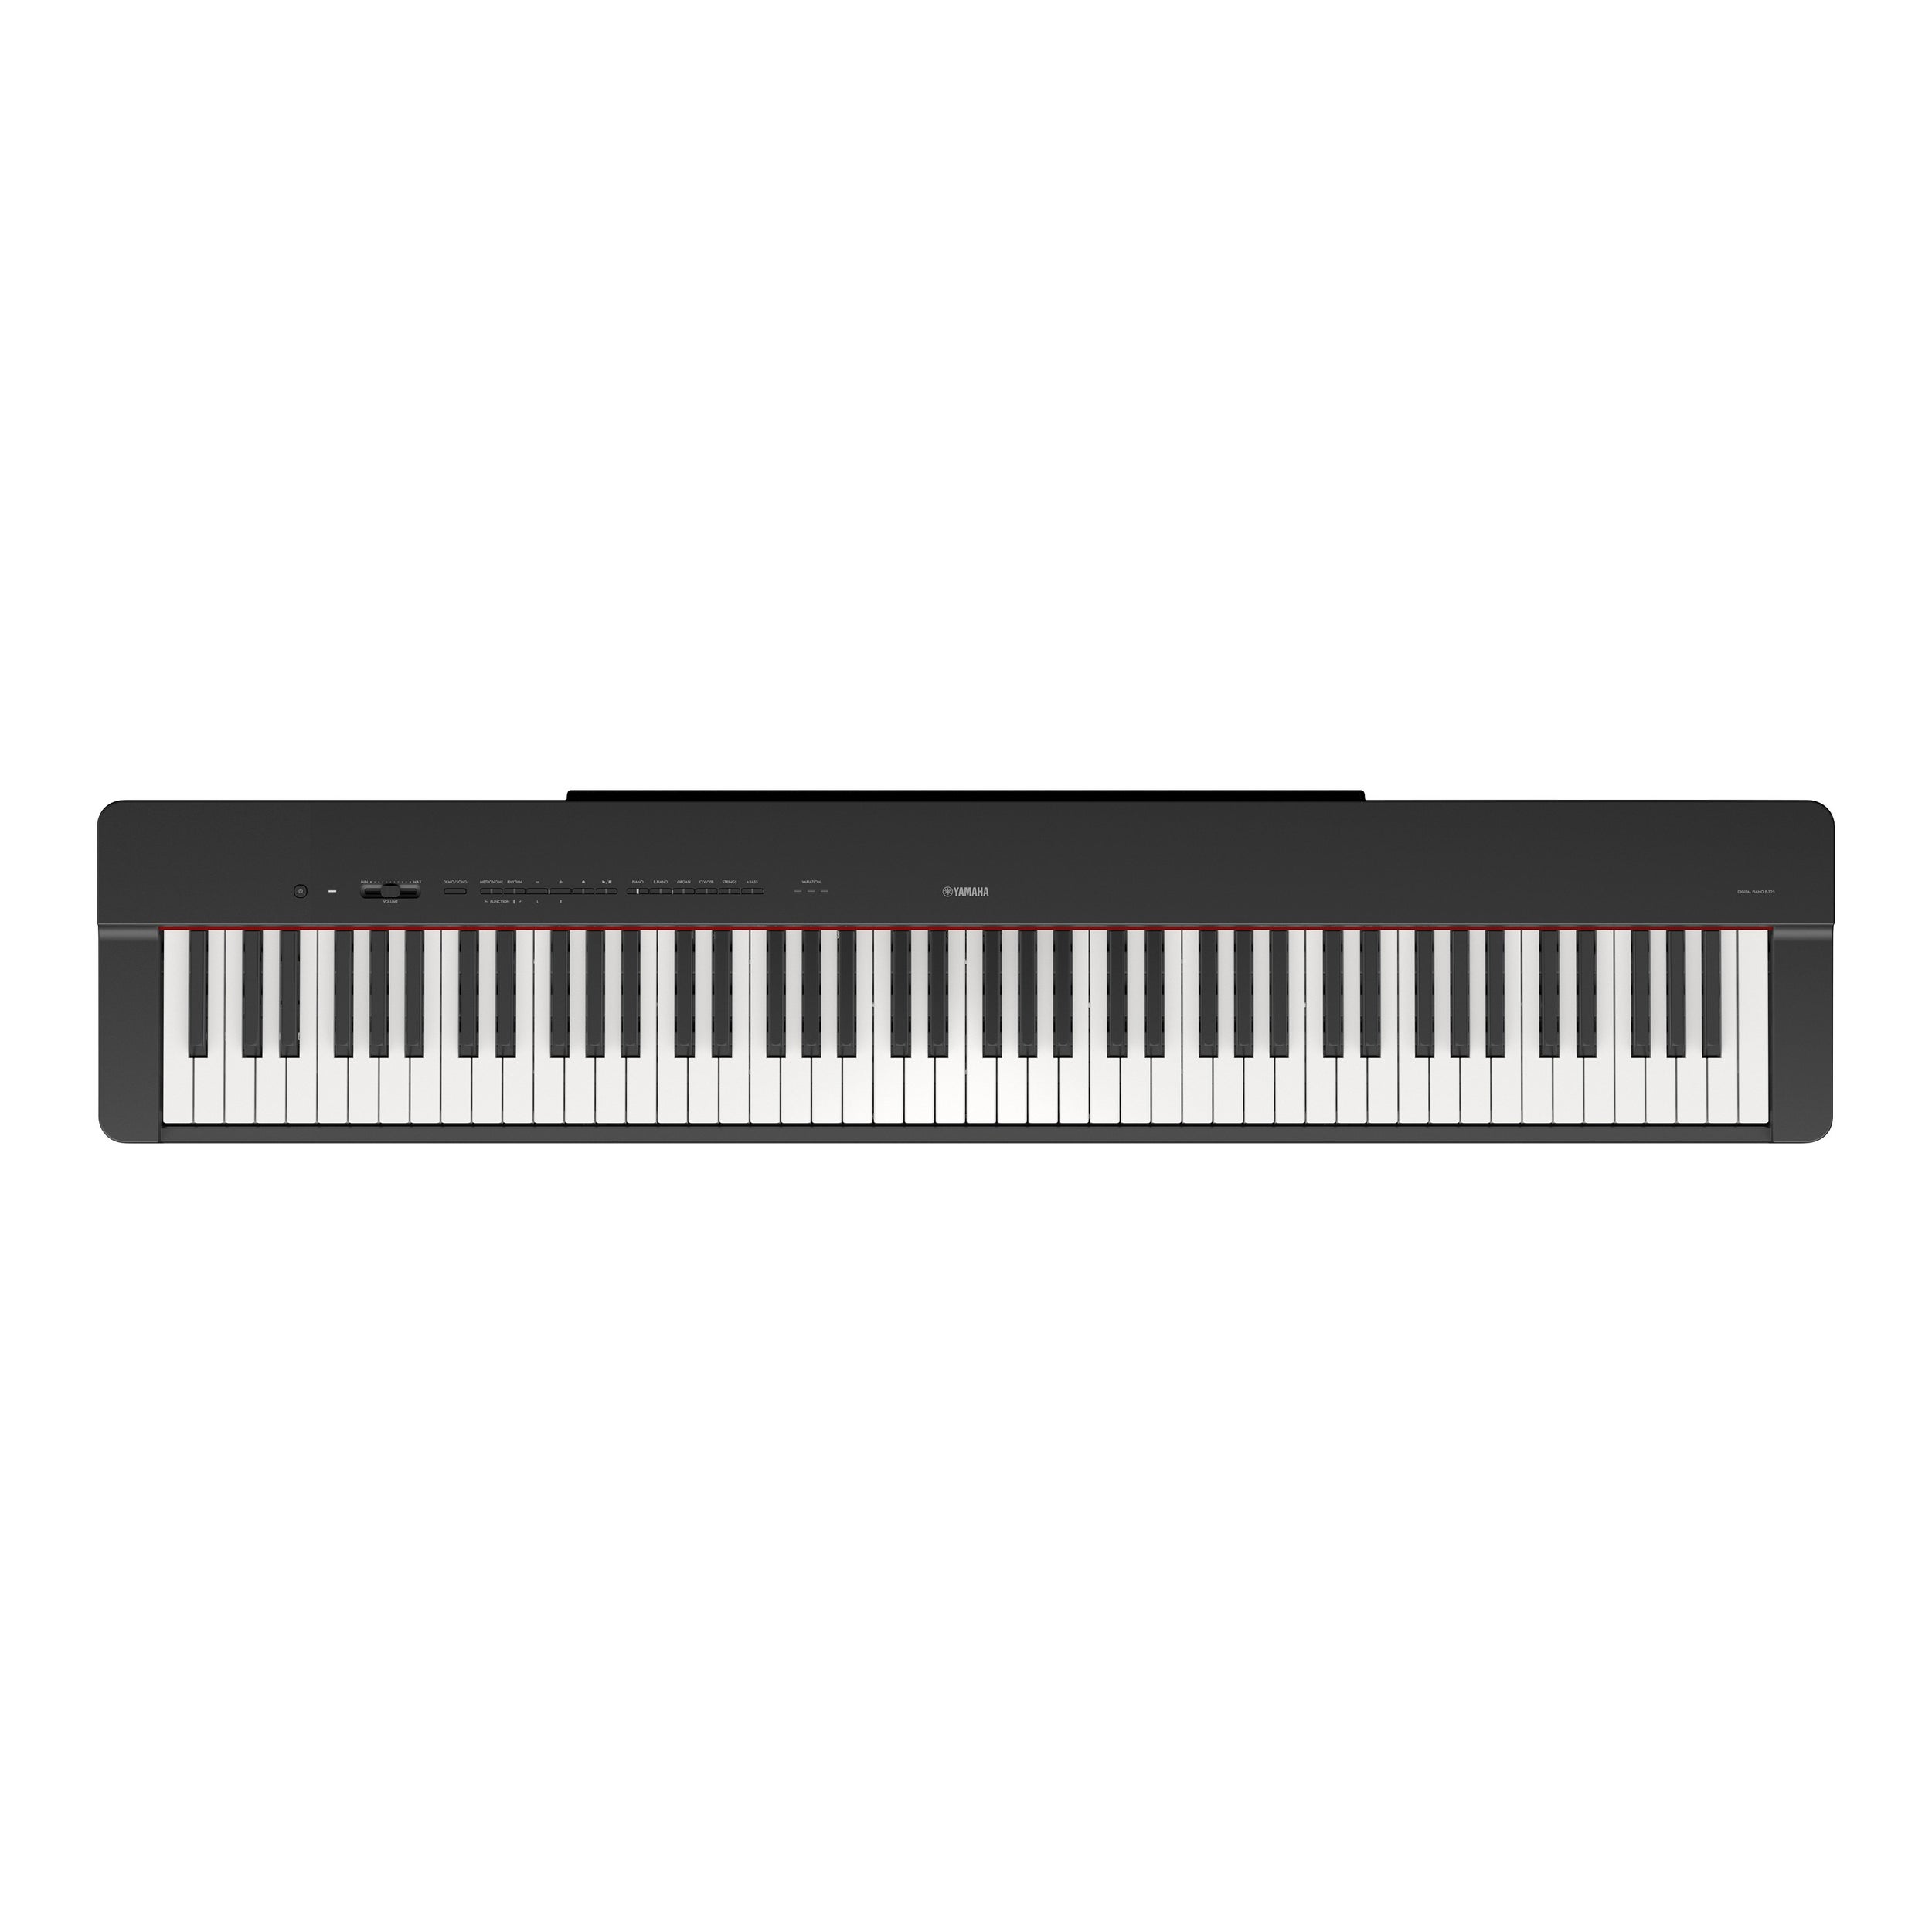 Yamaha P-525 88-key Digital Piano with Speakers Home Bundle - Black